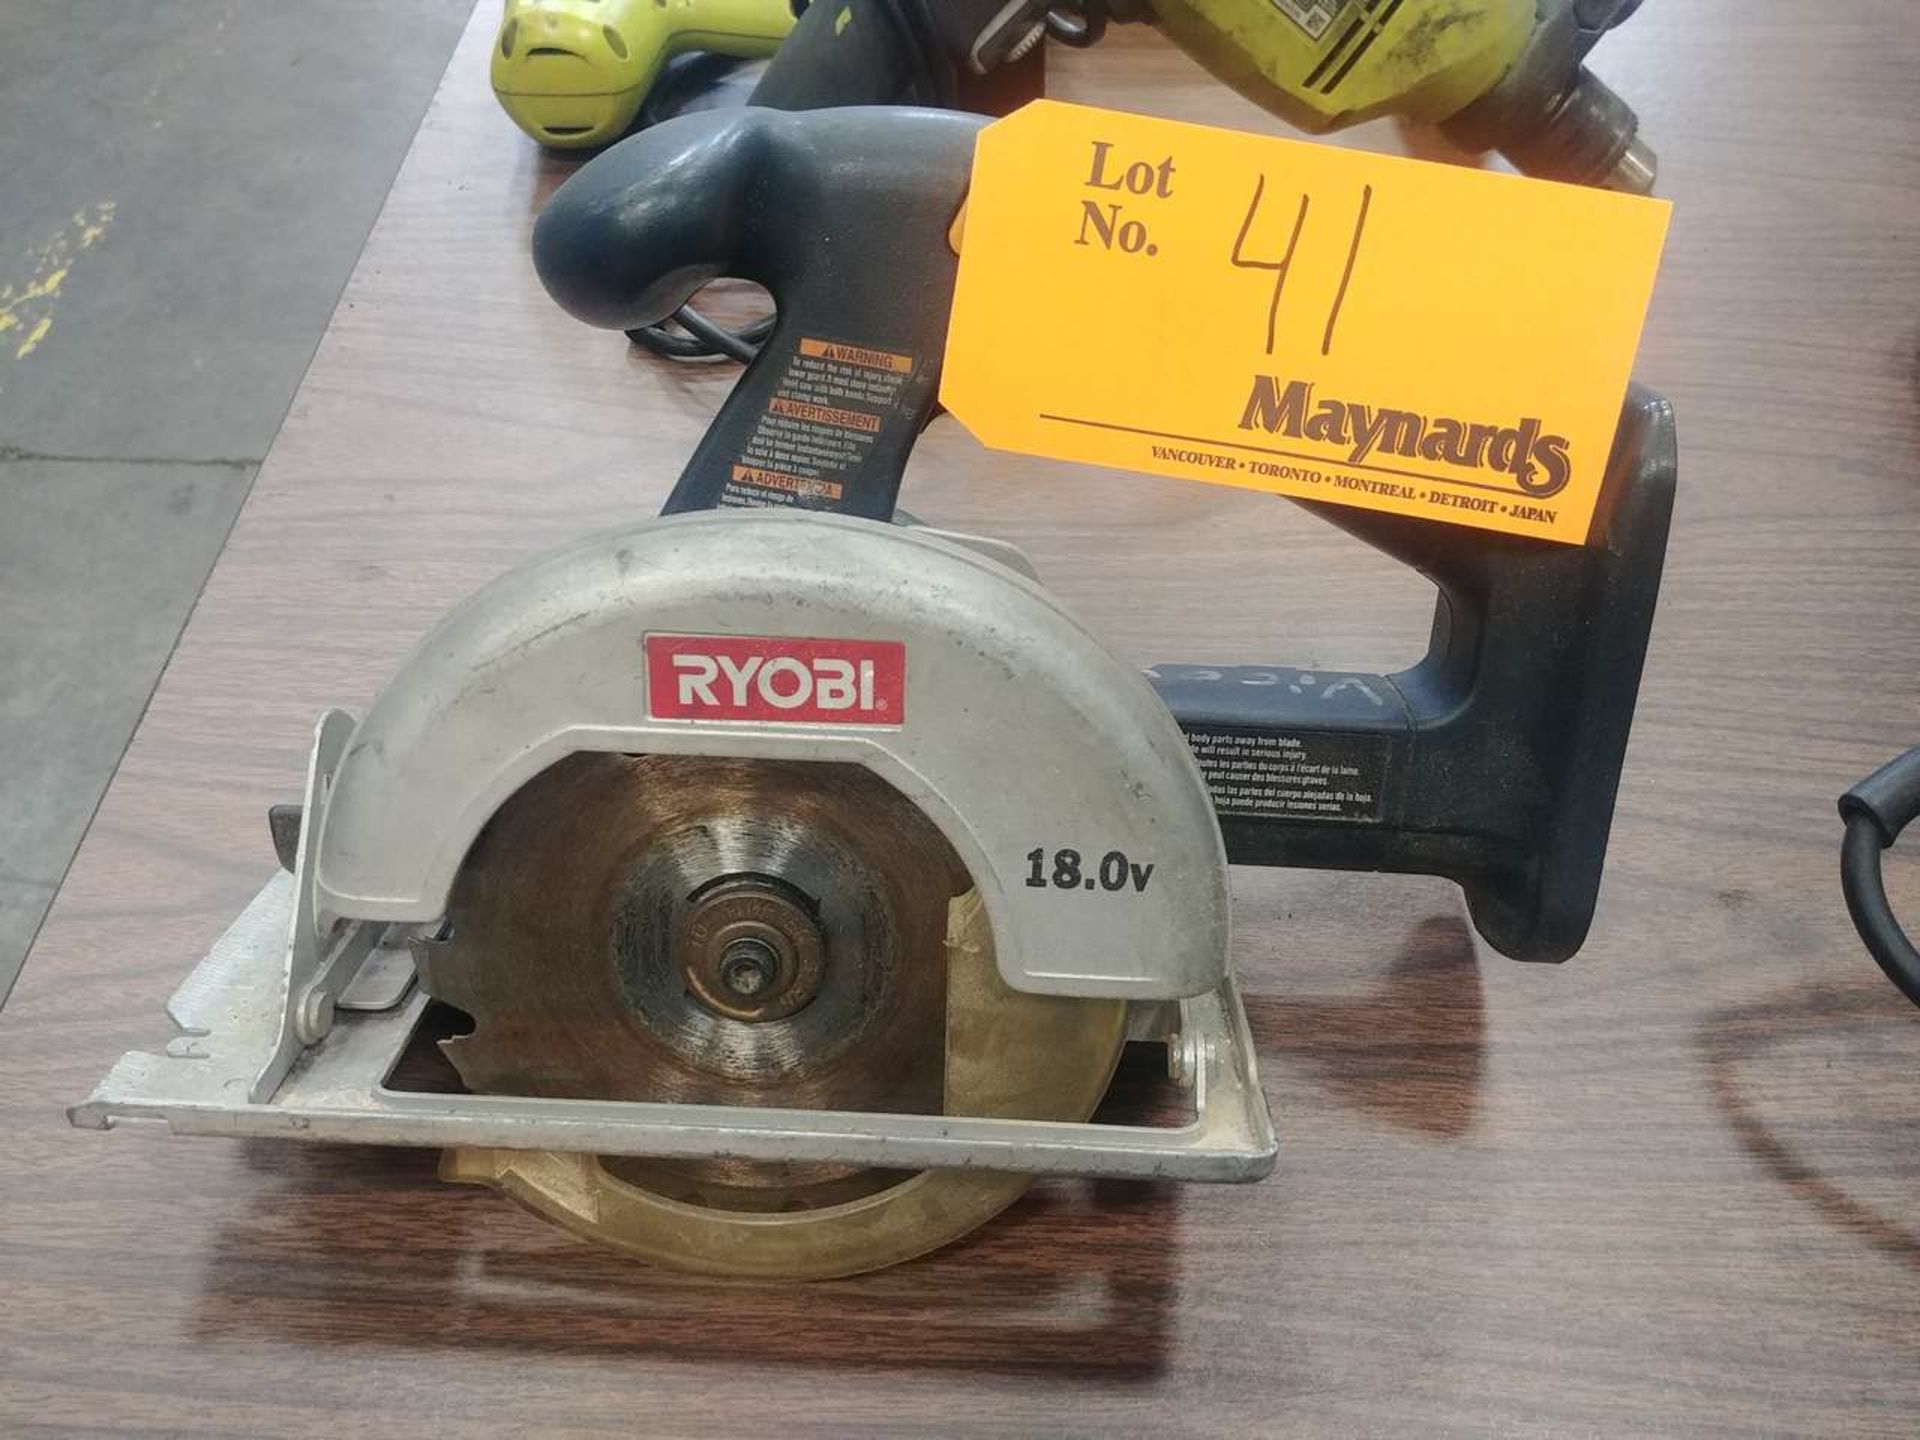 Ryobi P501 6" Circular saw